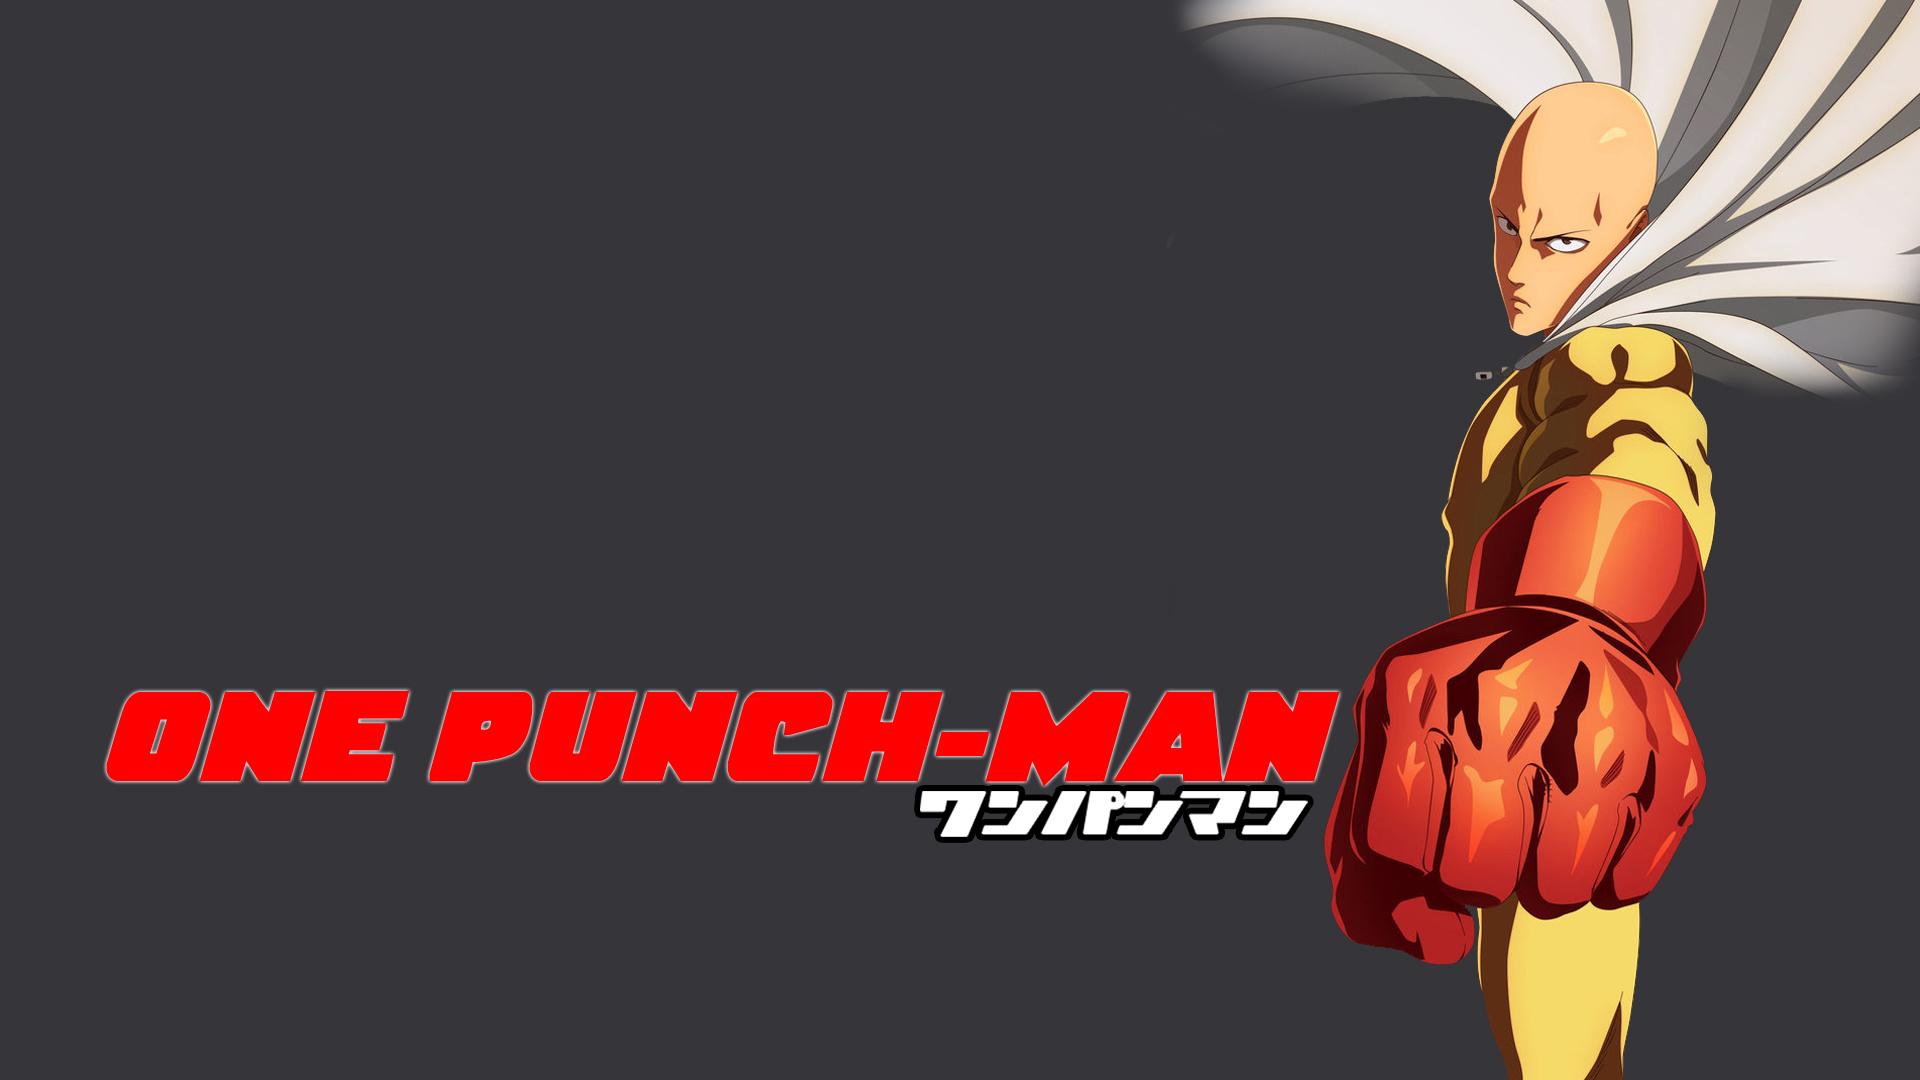 One Punch Man Desktop Wallpaper